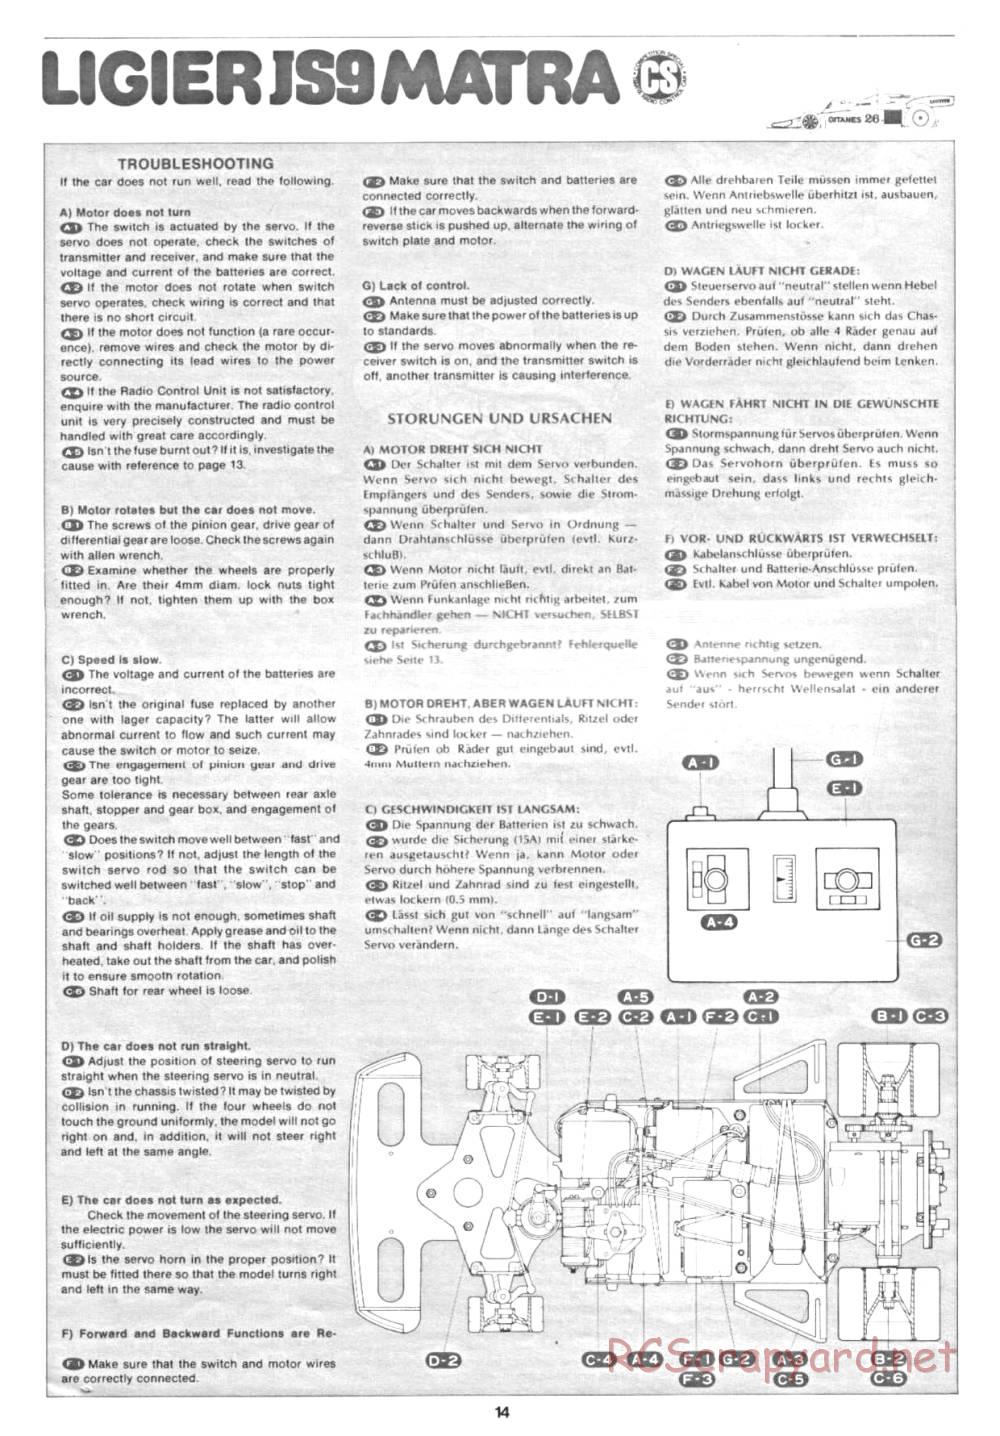 Tamiya - Ligier JS9 Matra (CS) - 58012 - Manual - Page 14